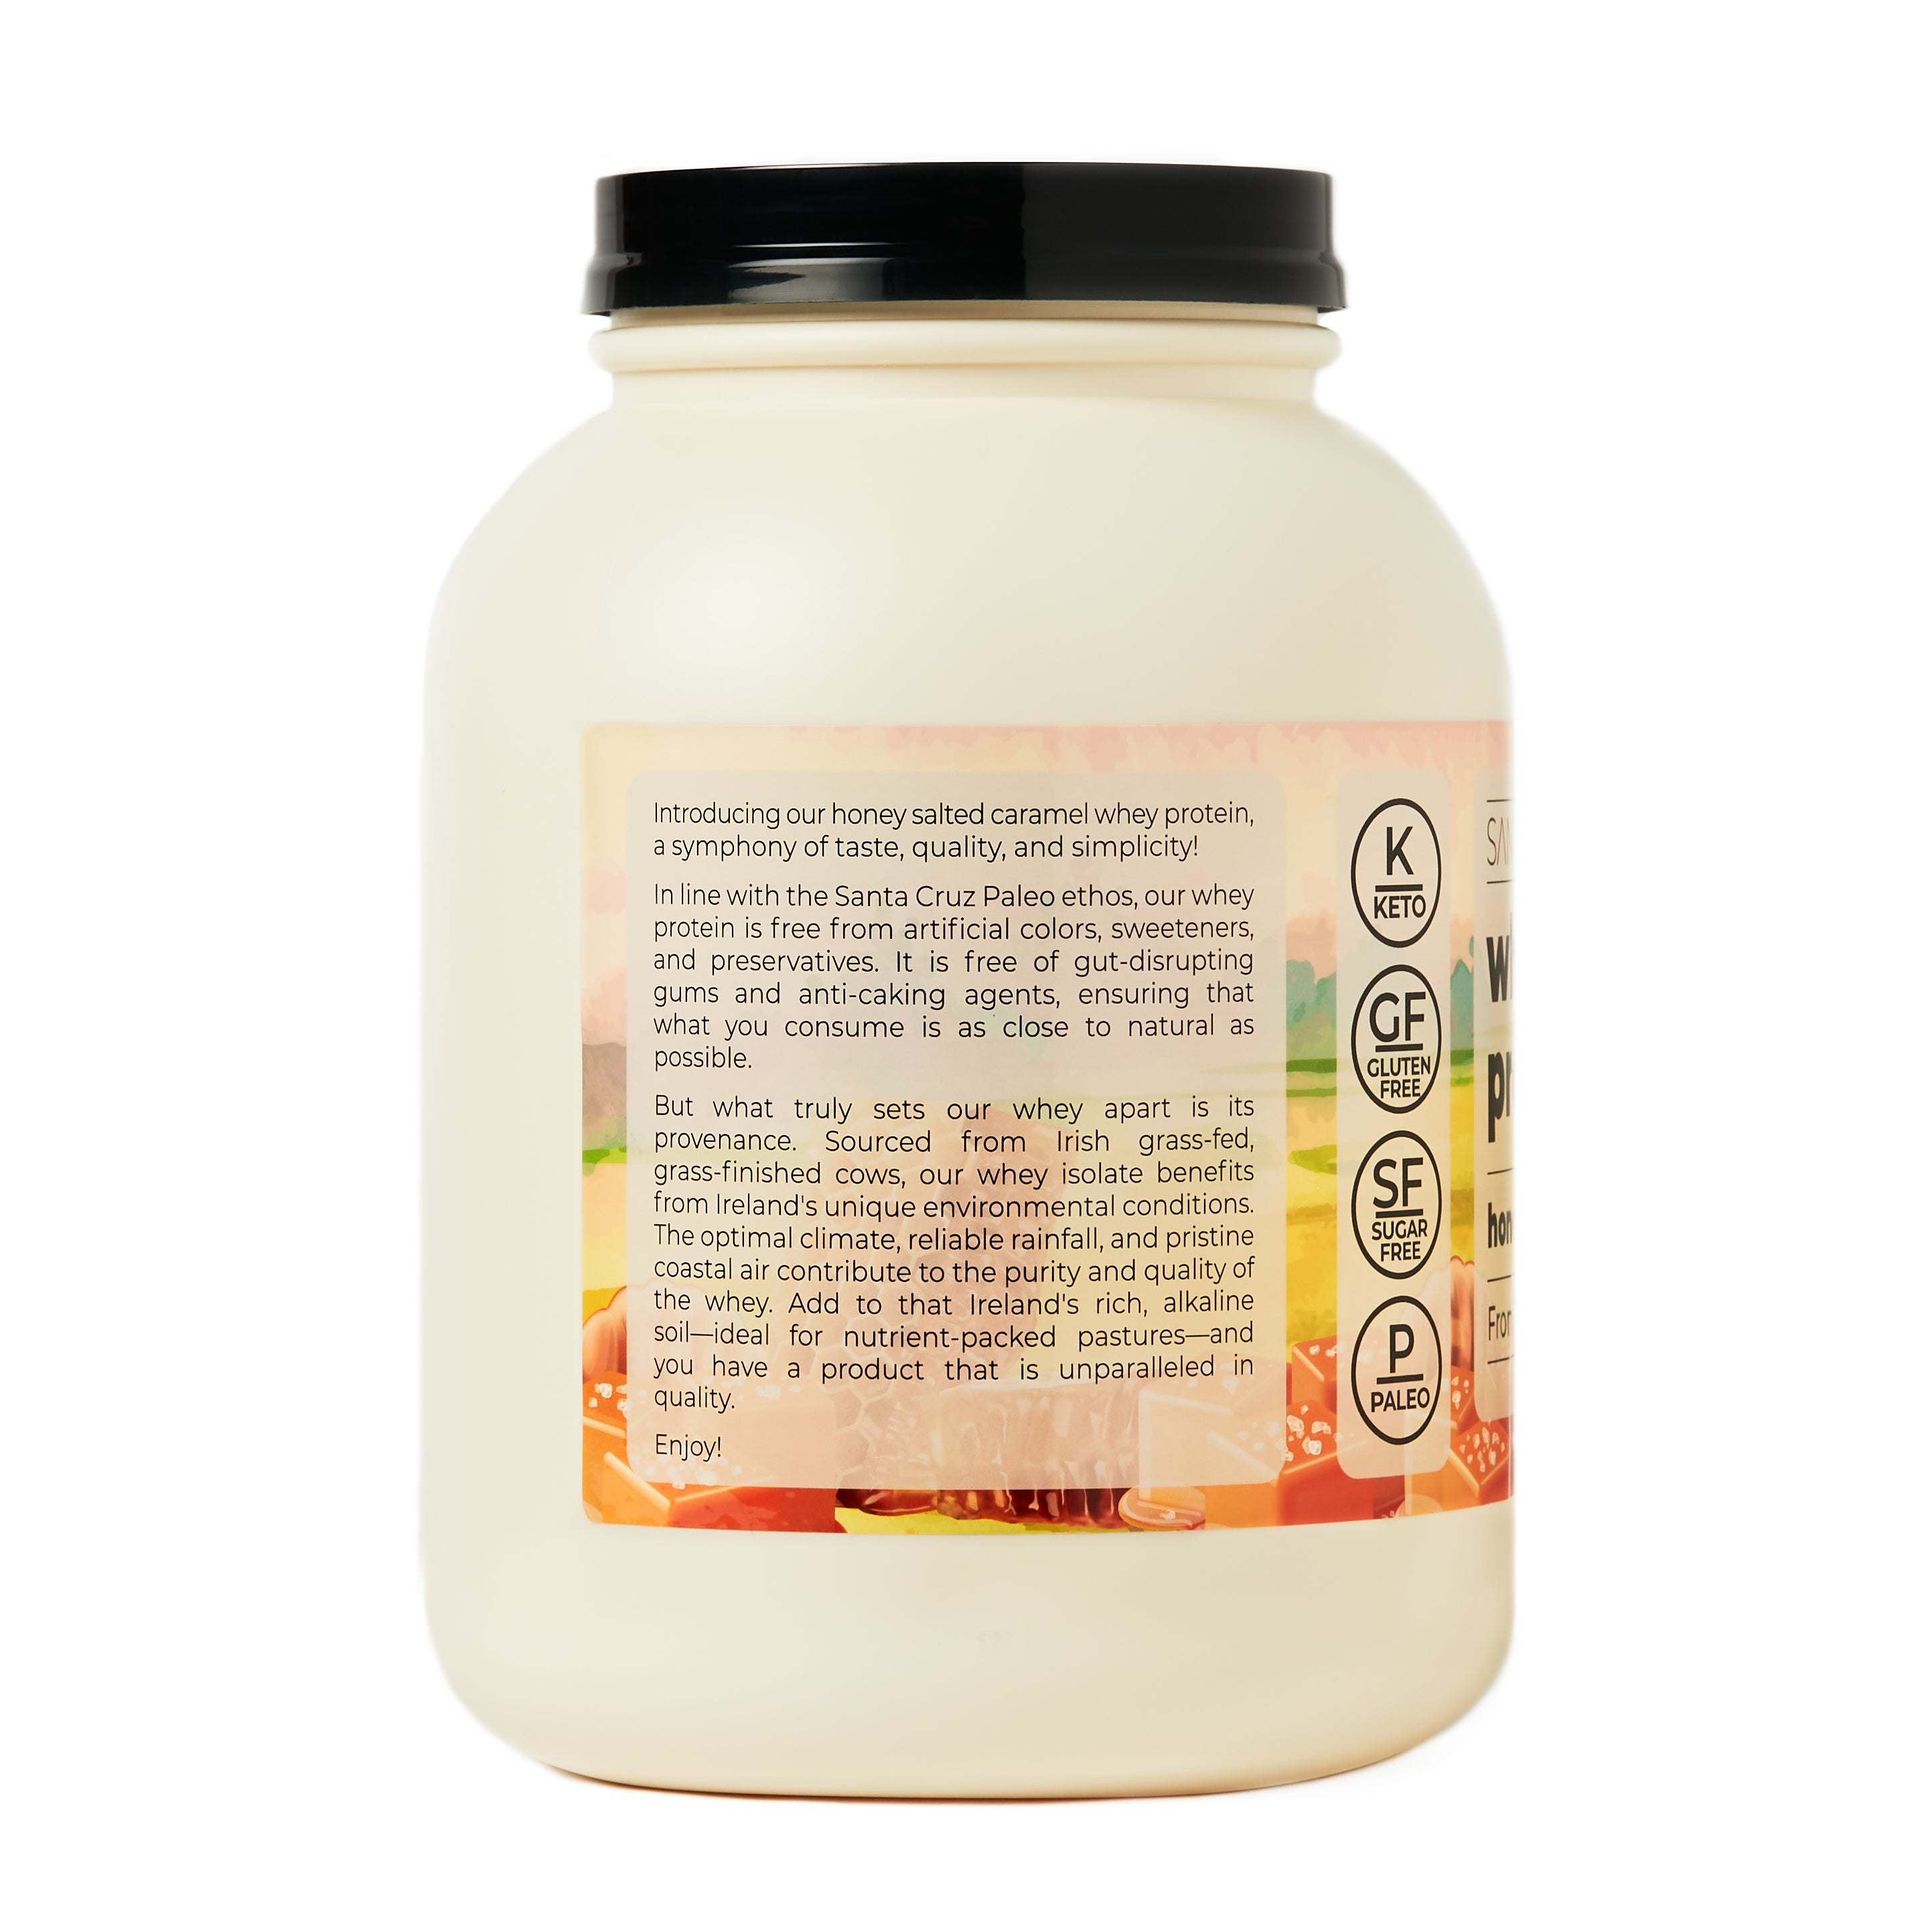 Honey Salted Caramel Whey Protein Tub – Santa Cruz Paleo